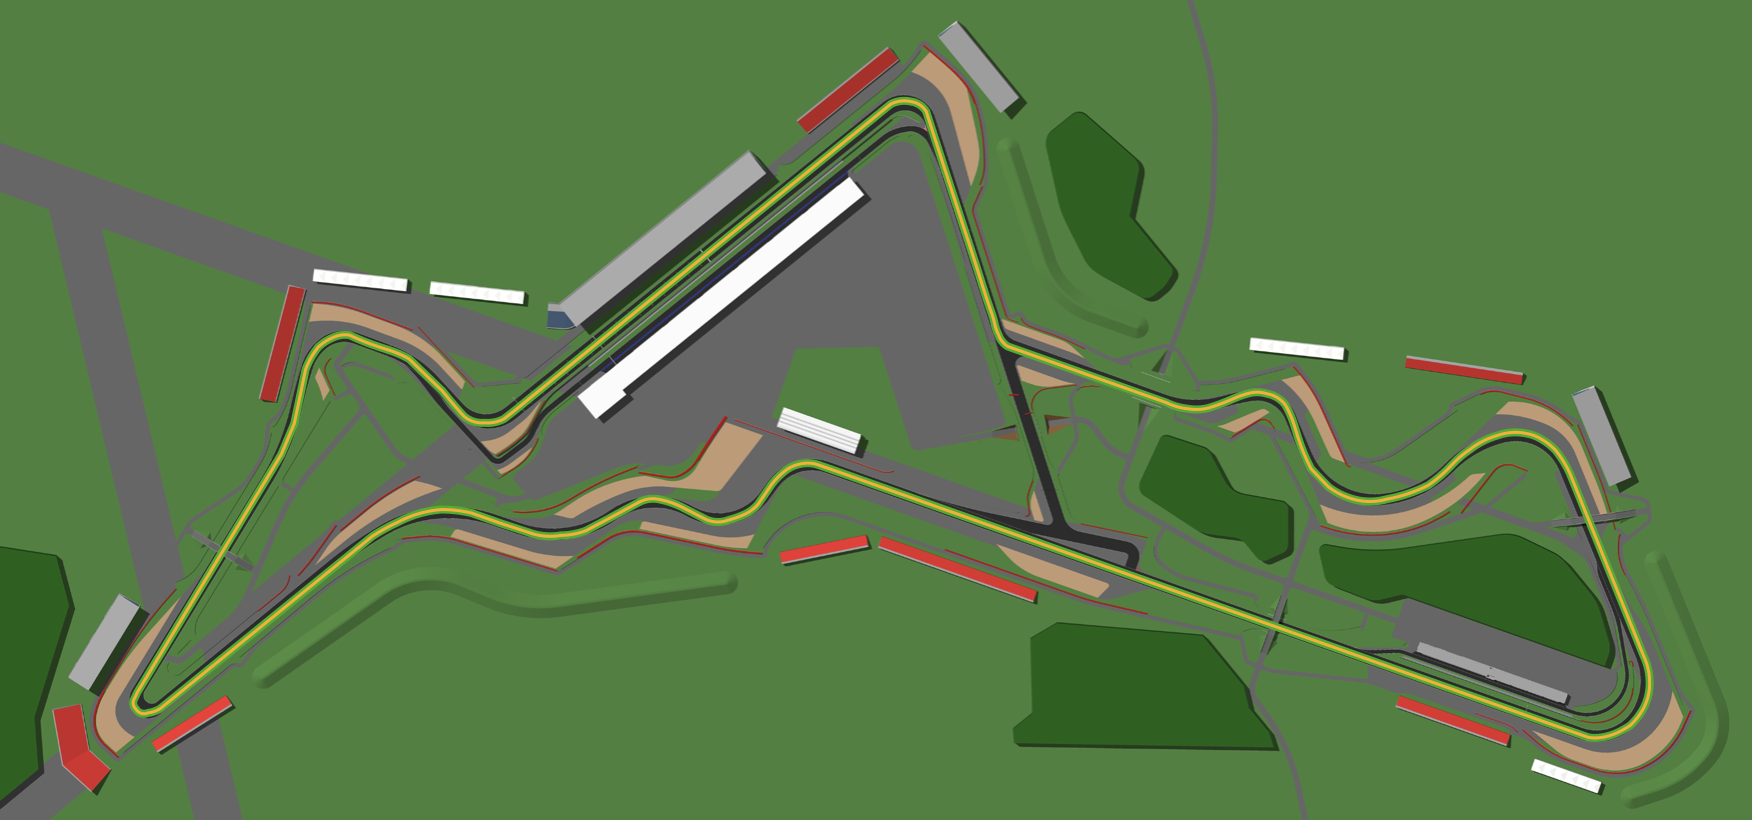 Full track layout